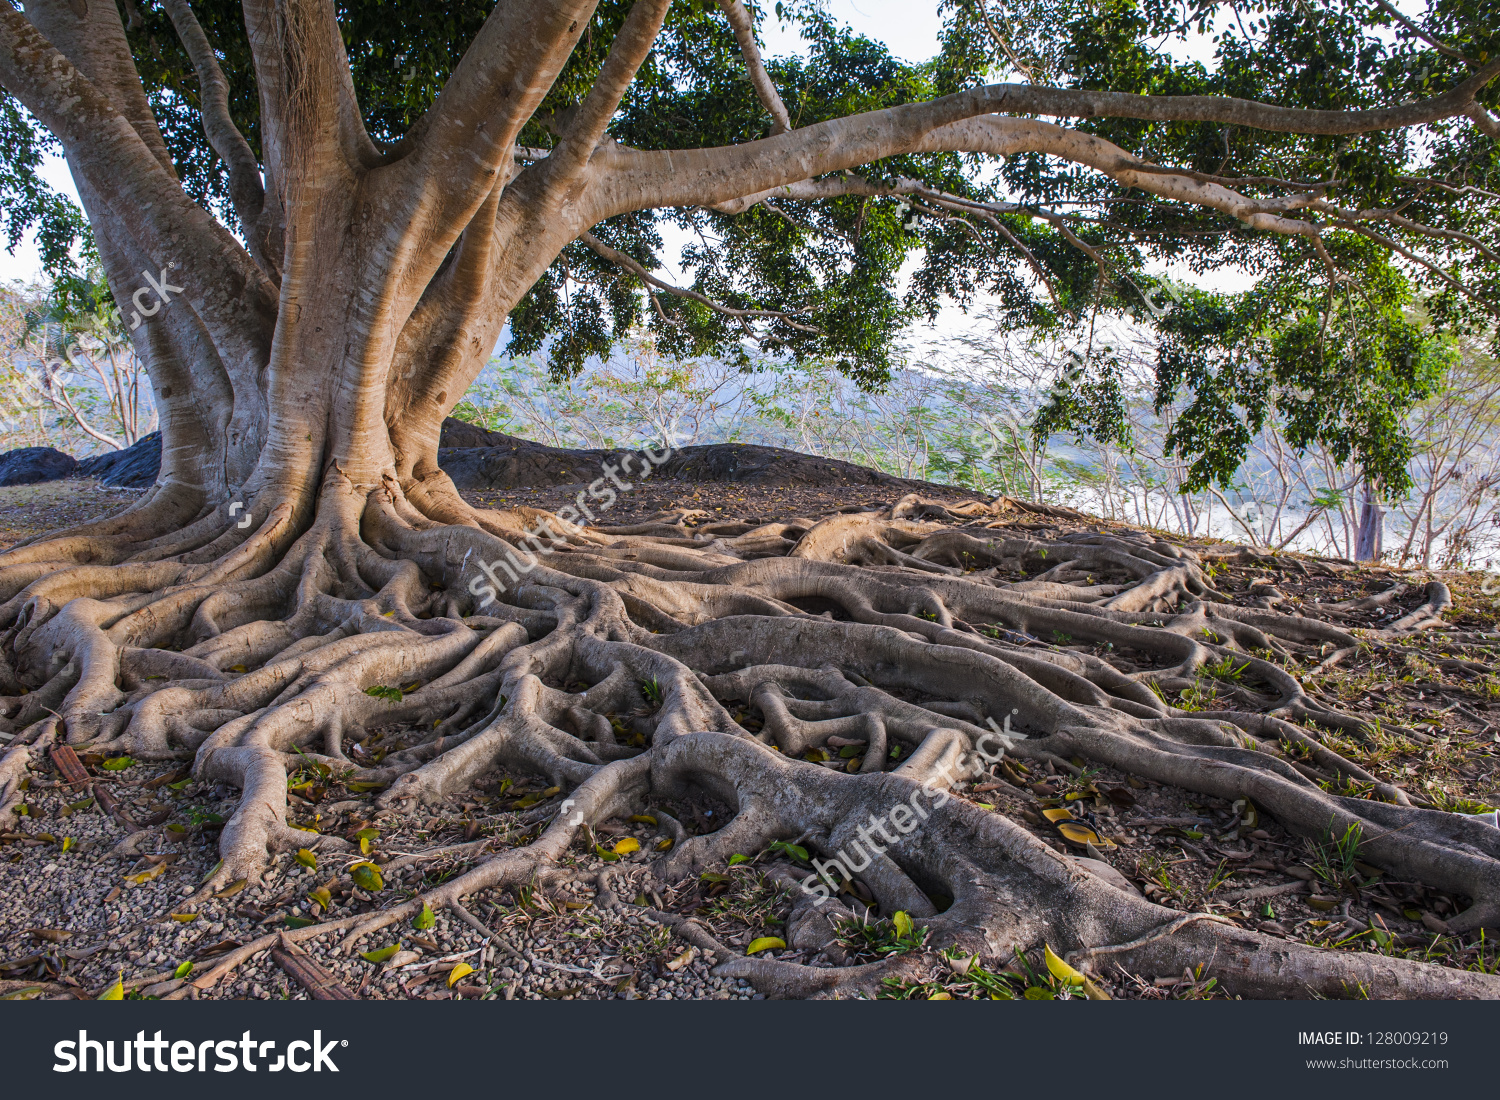 Tree Root #6